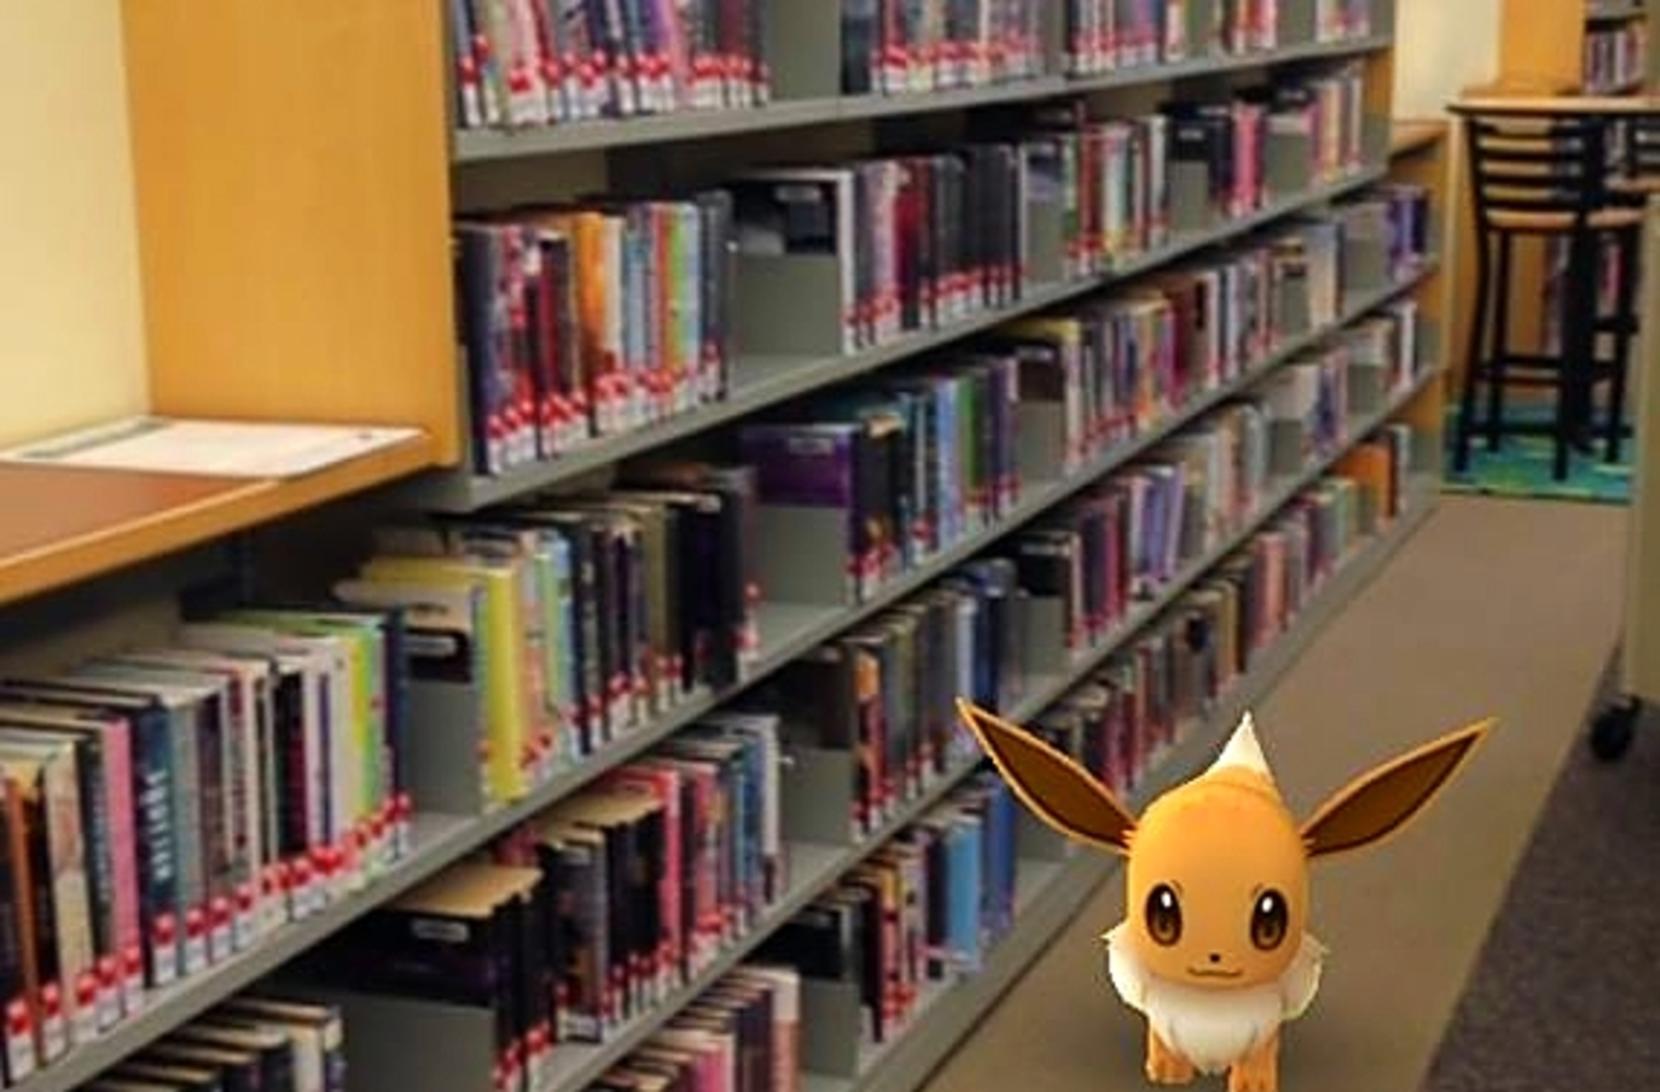 Pokemon Club  Evergreen Park Public Library